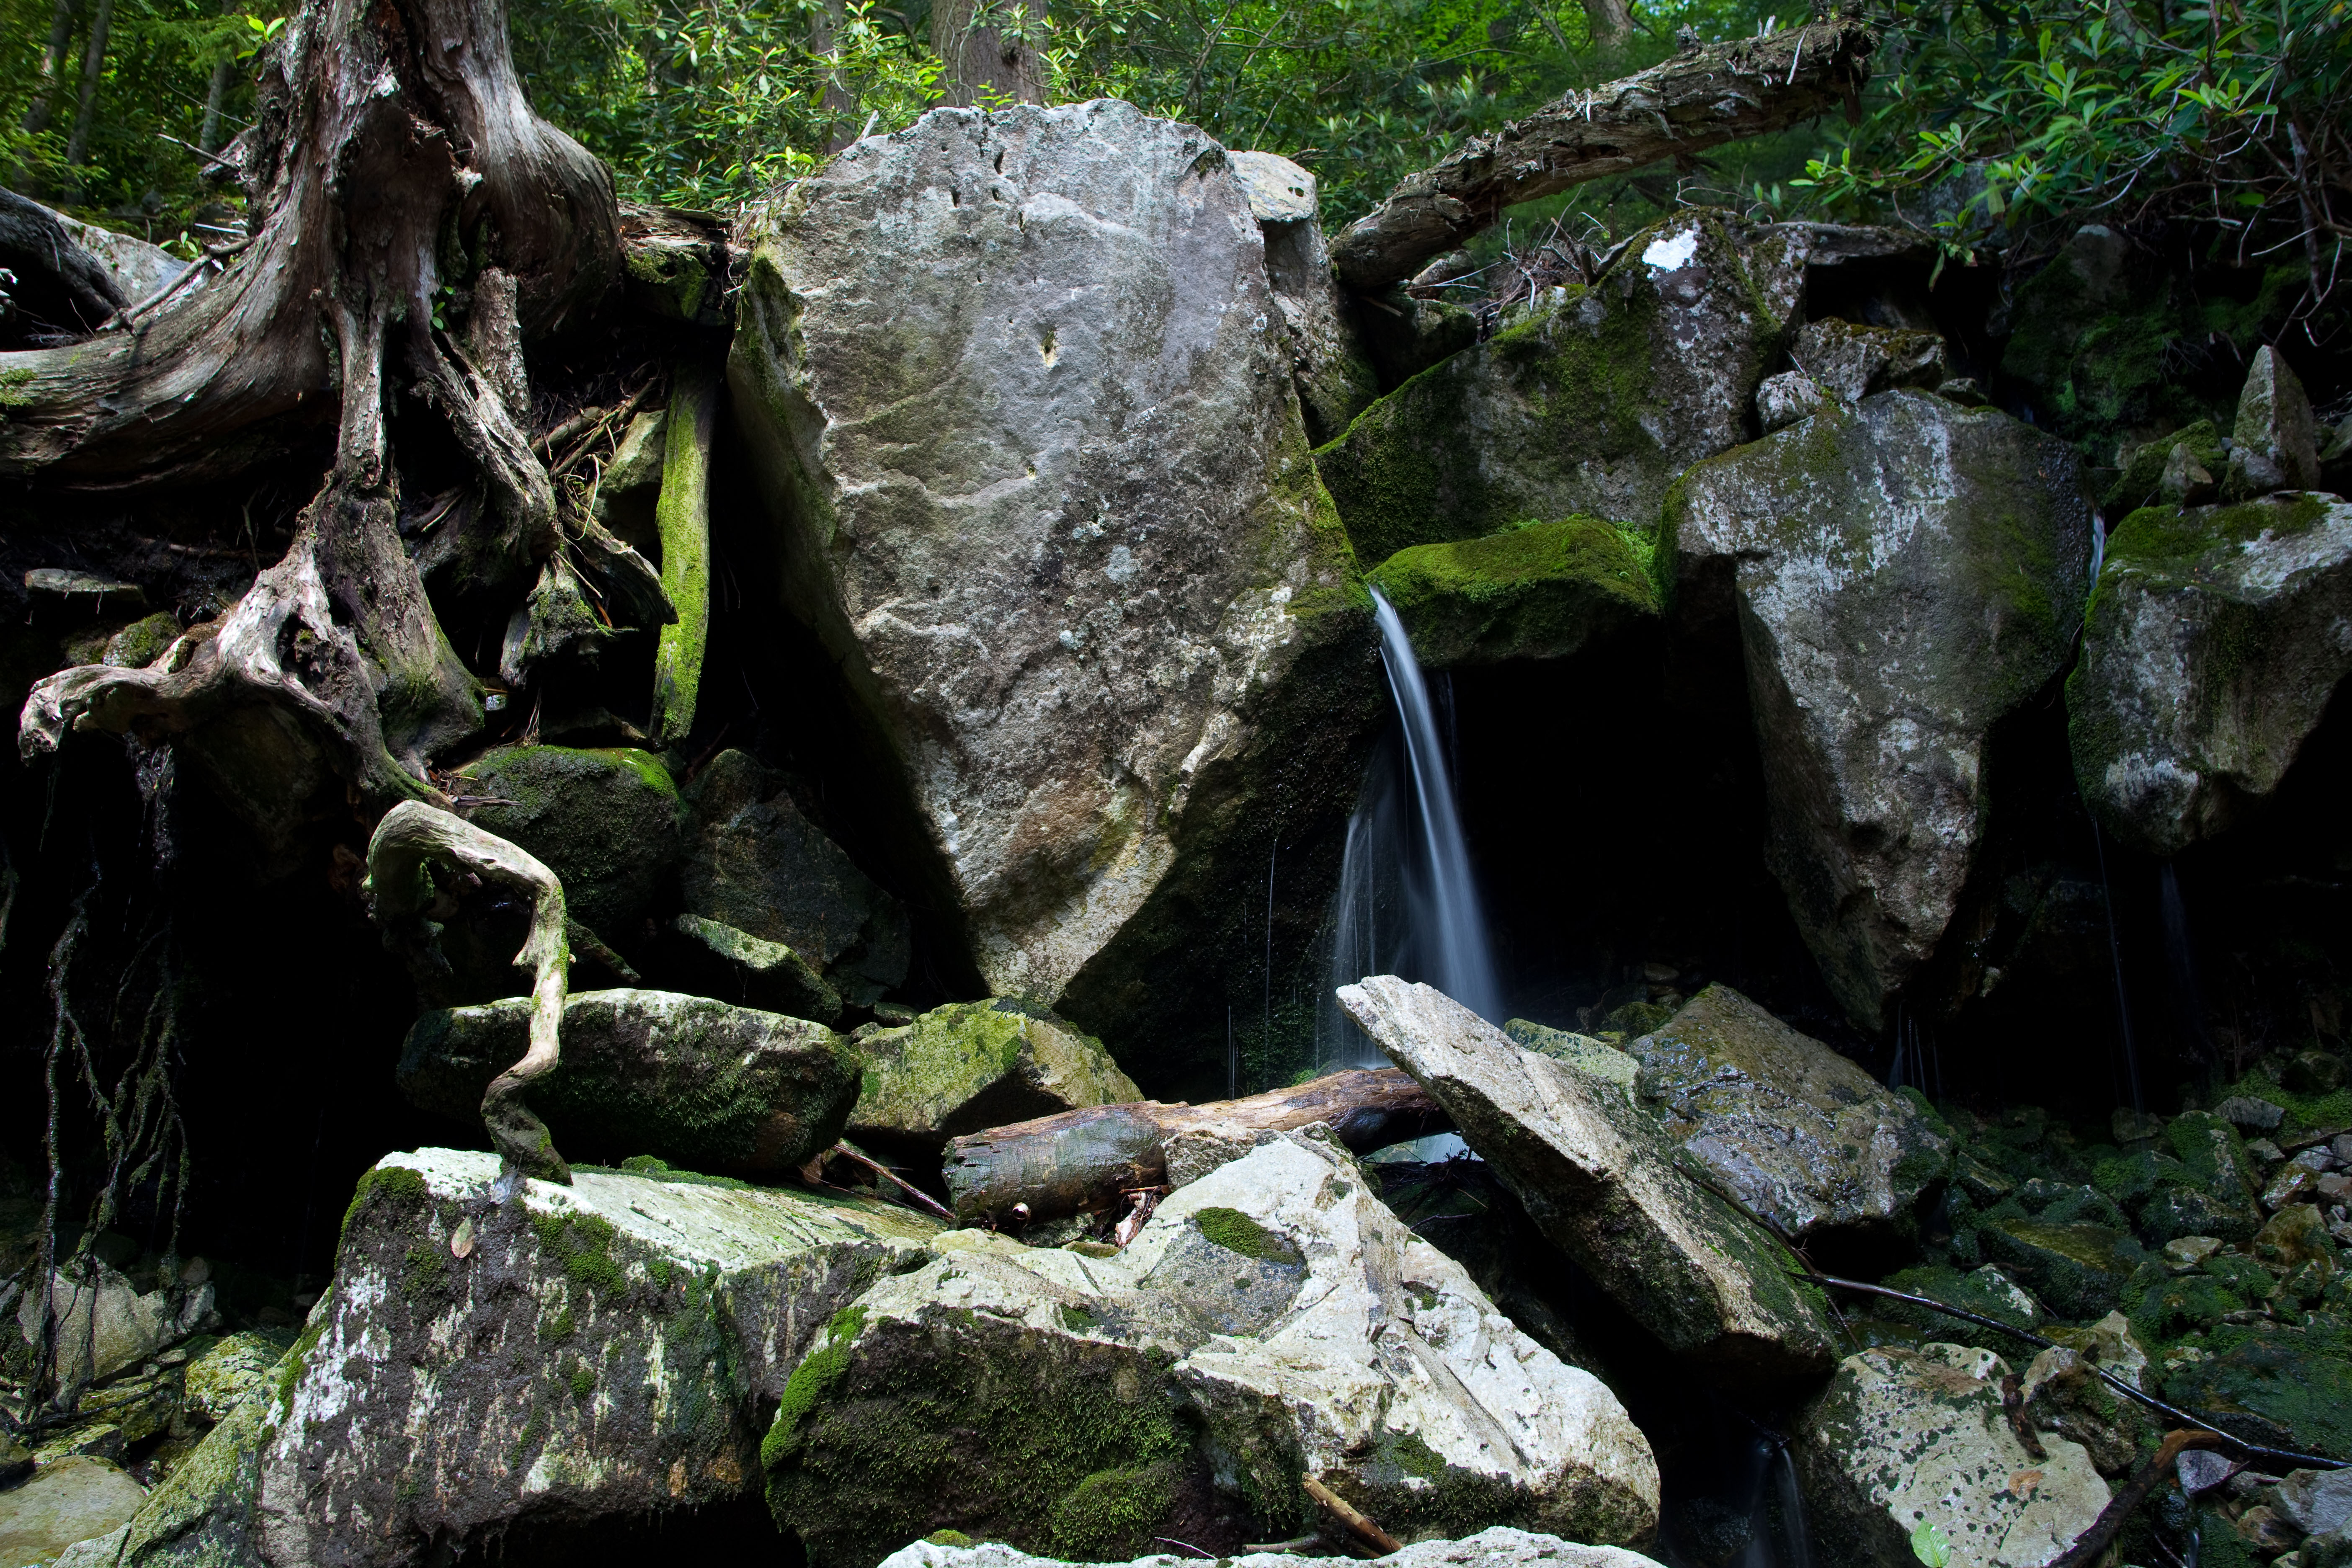 File:Rocks-tree-roots-spring-forest - West Virginia - ForestWander ...